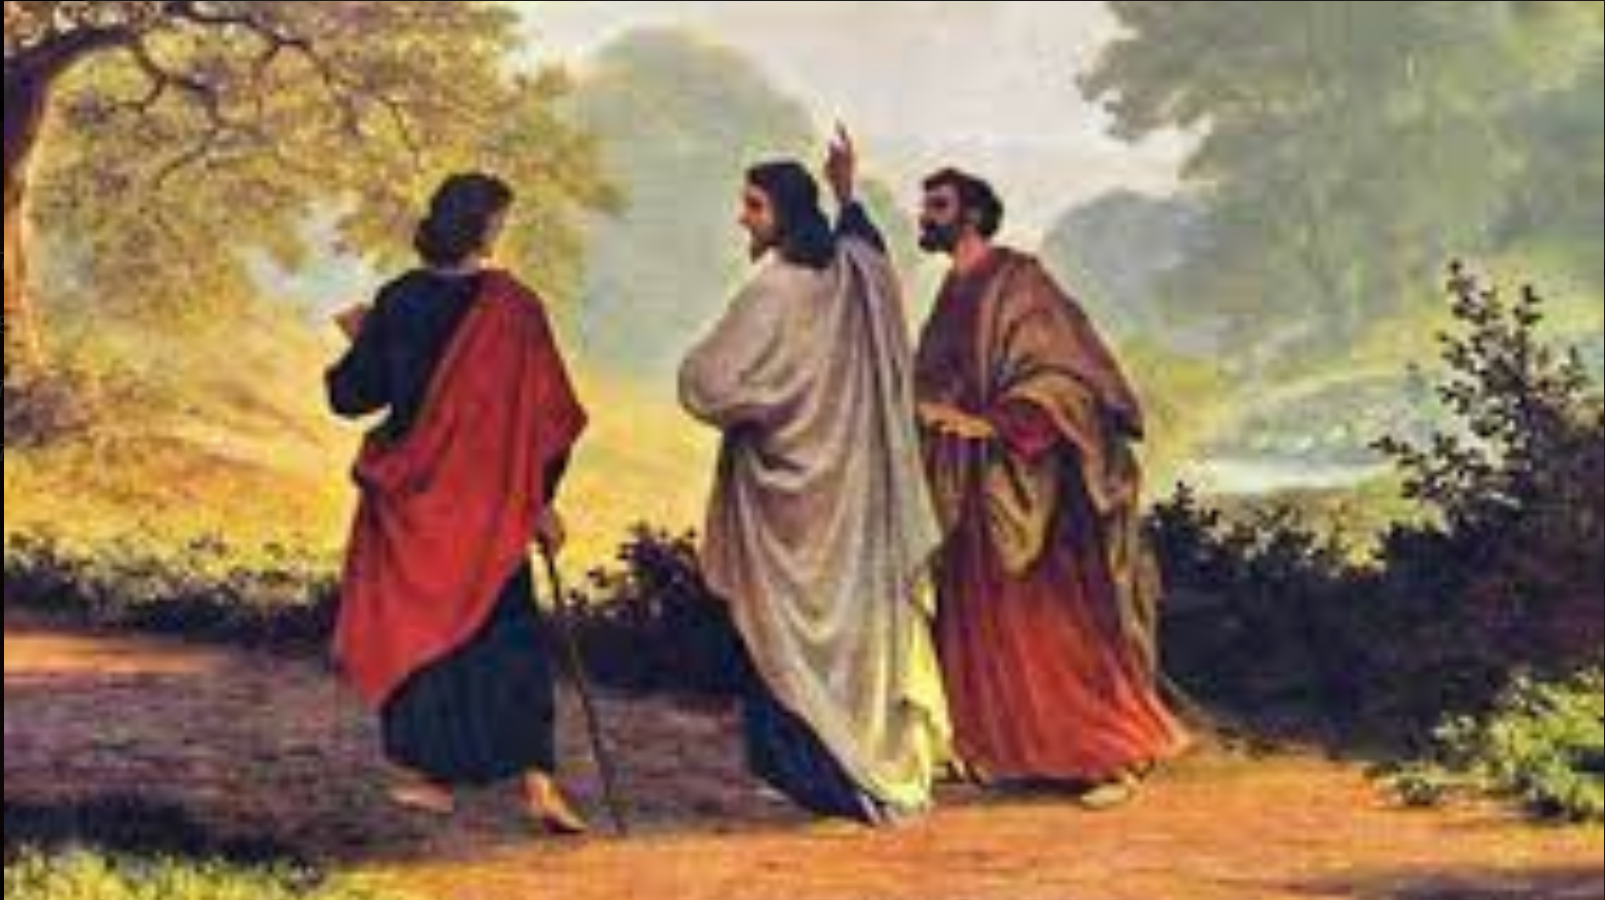 Jesus kept his identidy hidden from the two men